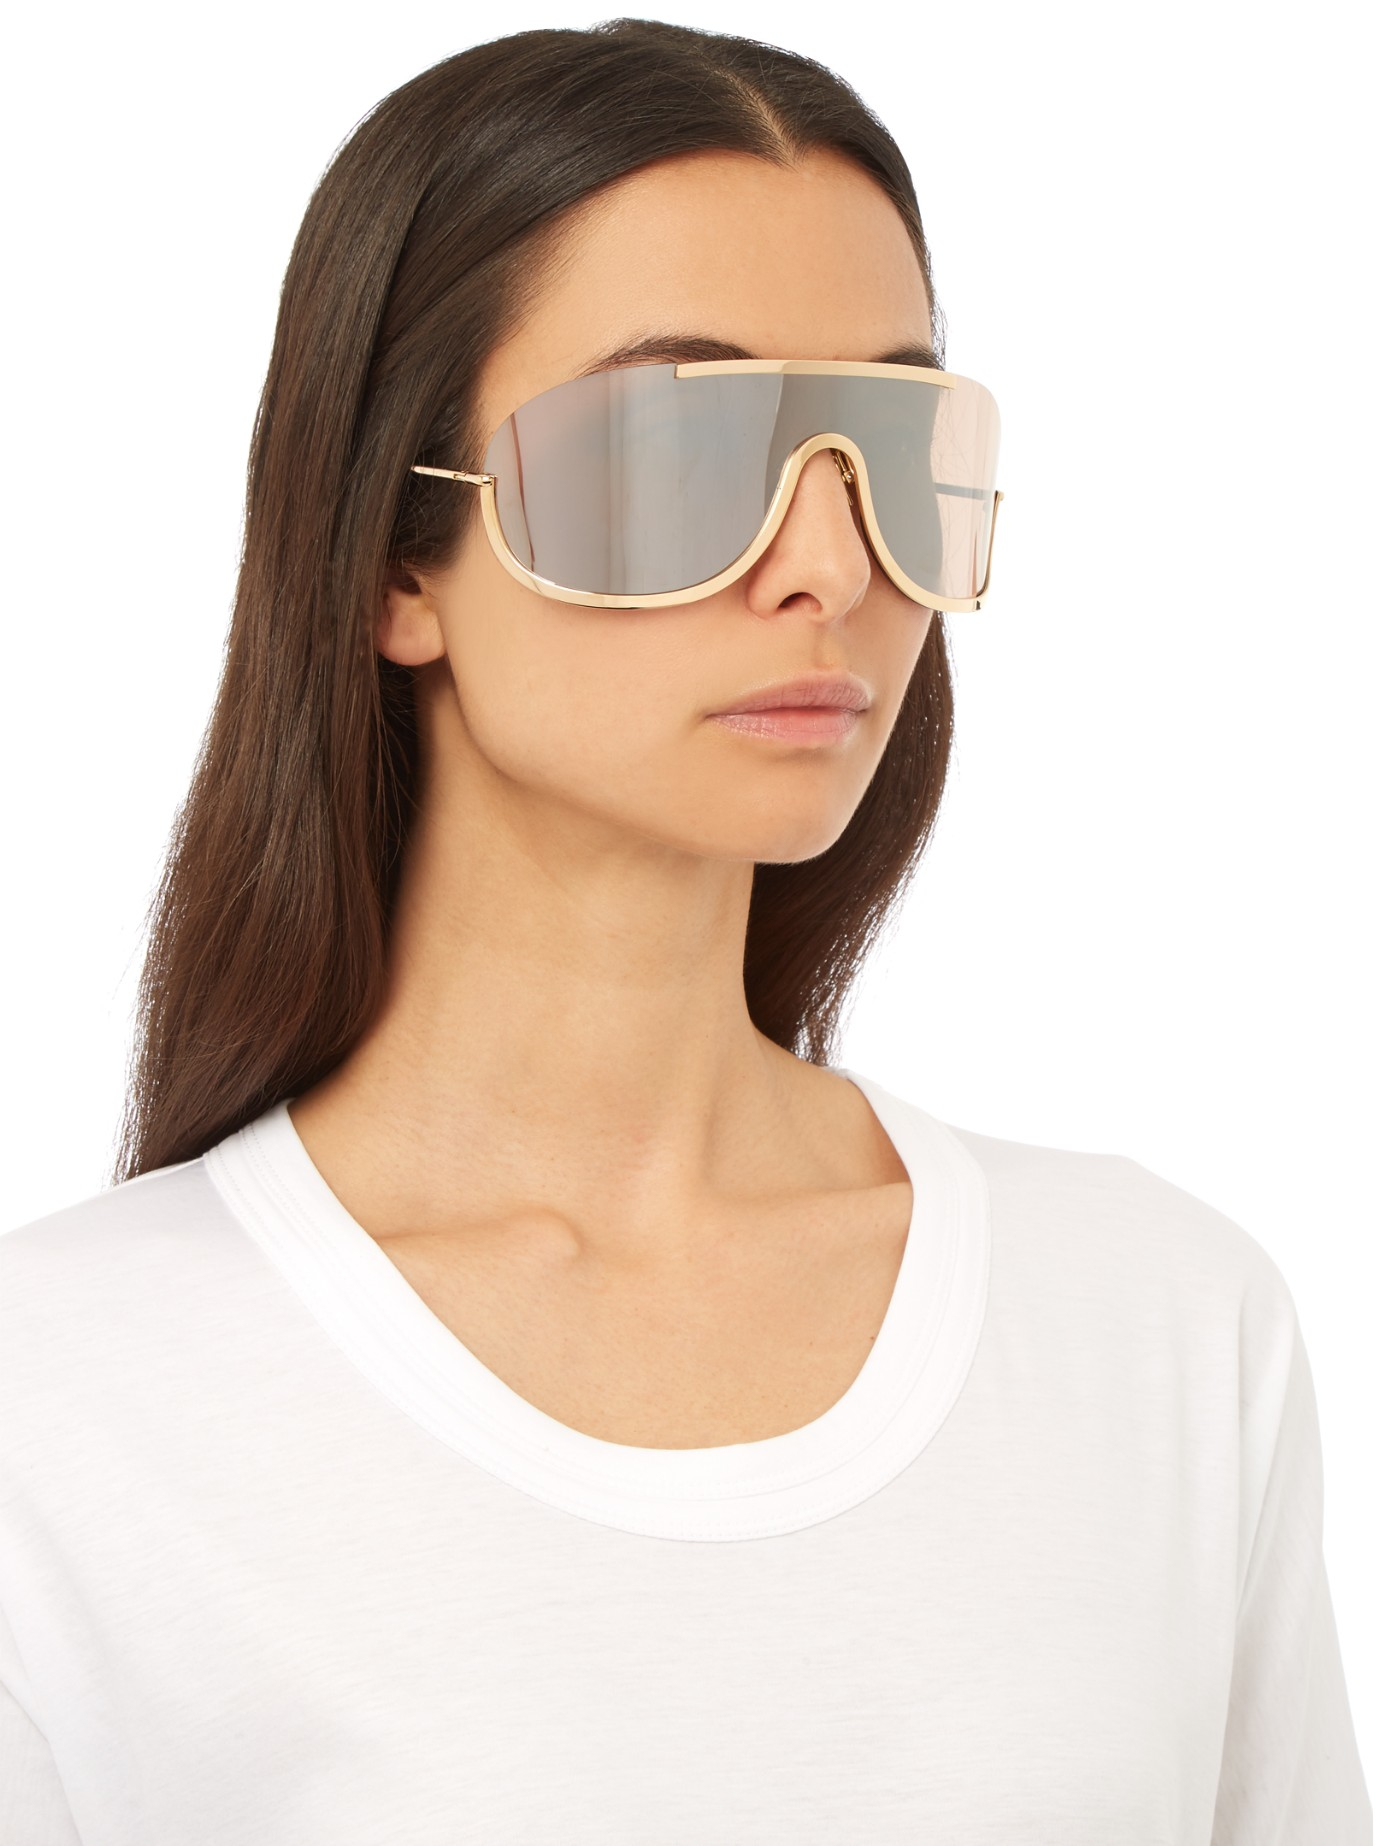 Acne Studios Mask Junior Sunglasses in Brown - Lyst